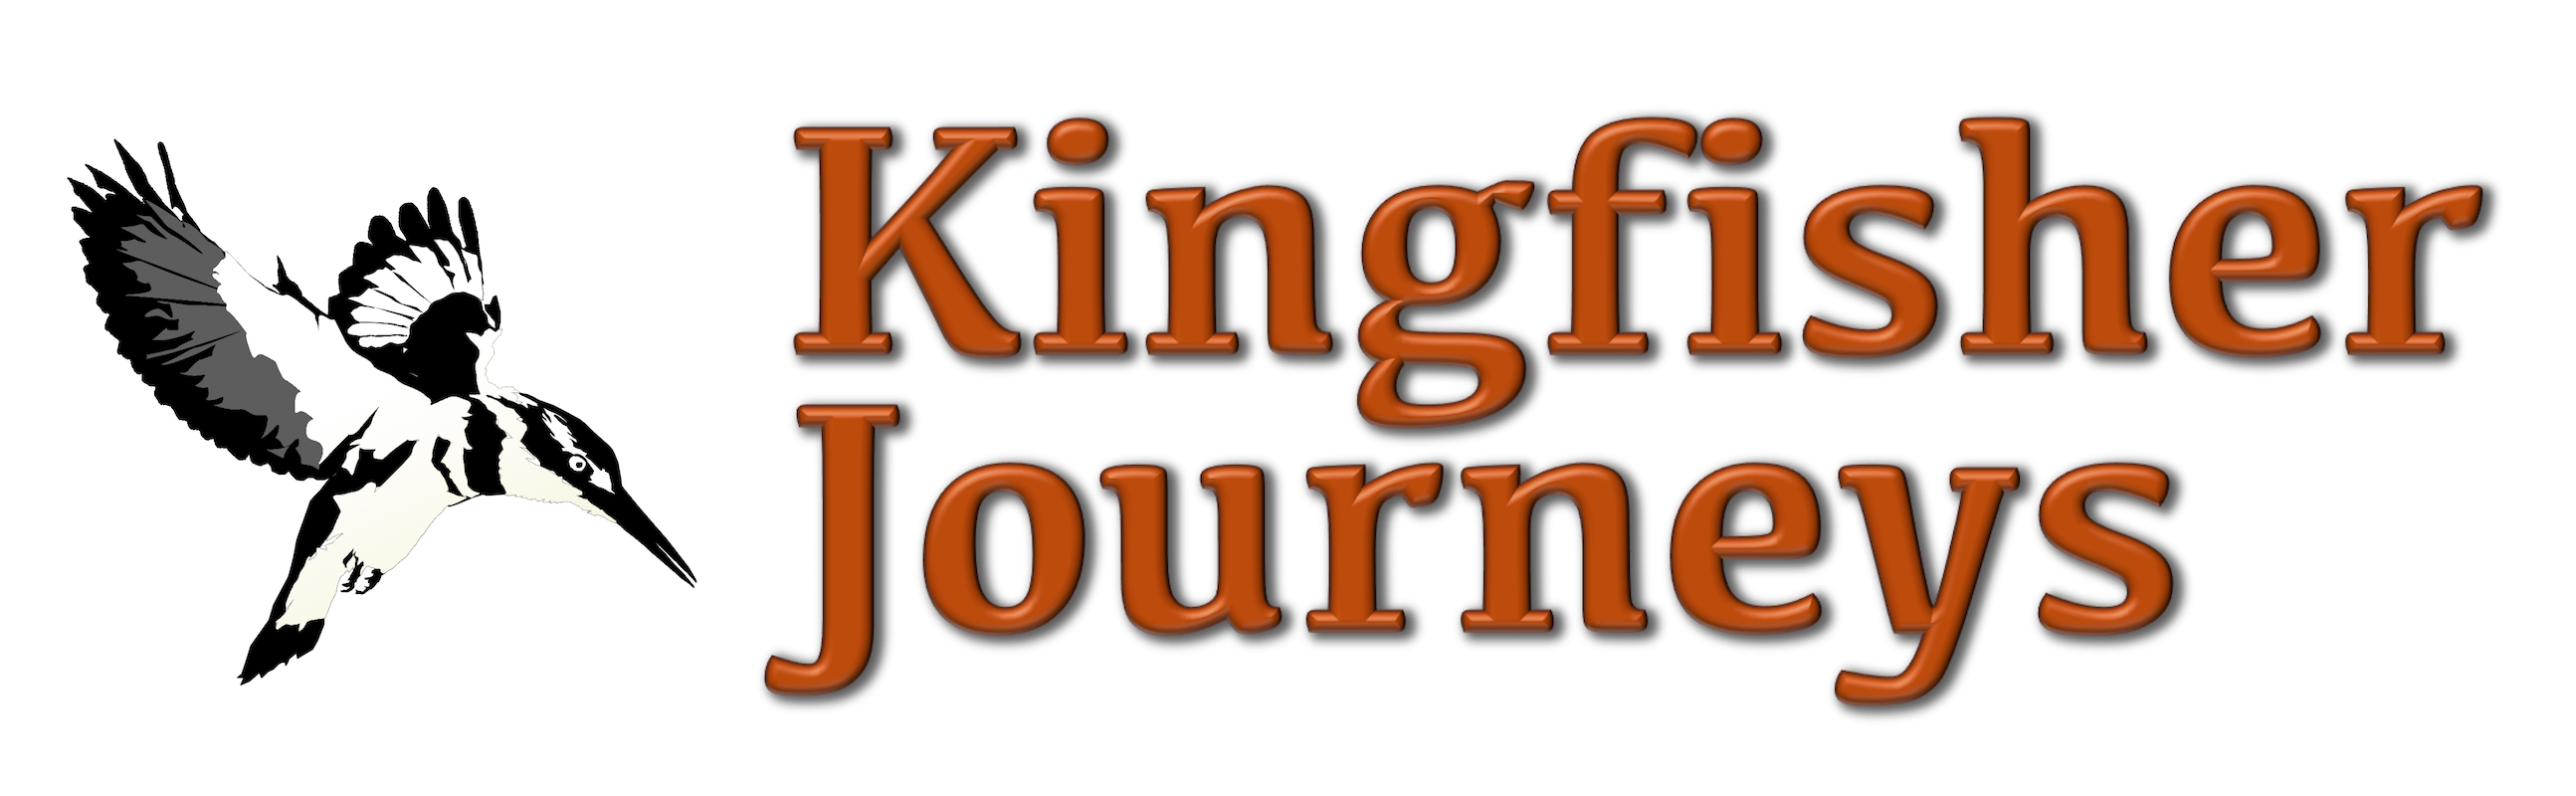 Kingfisher Journeys logo